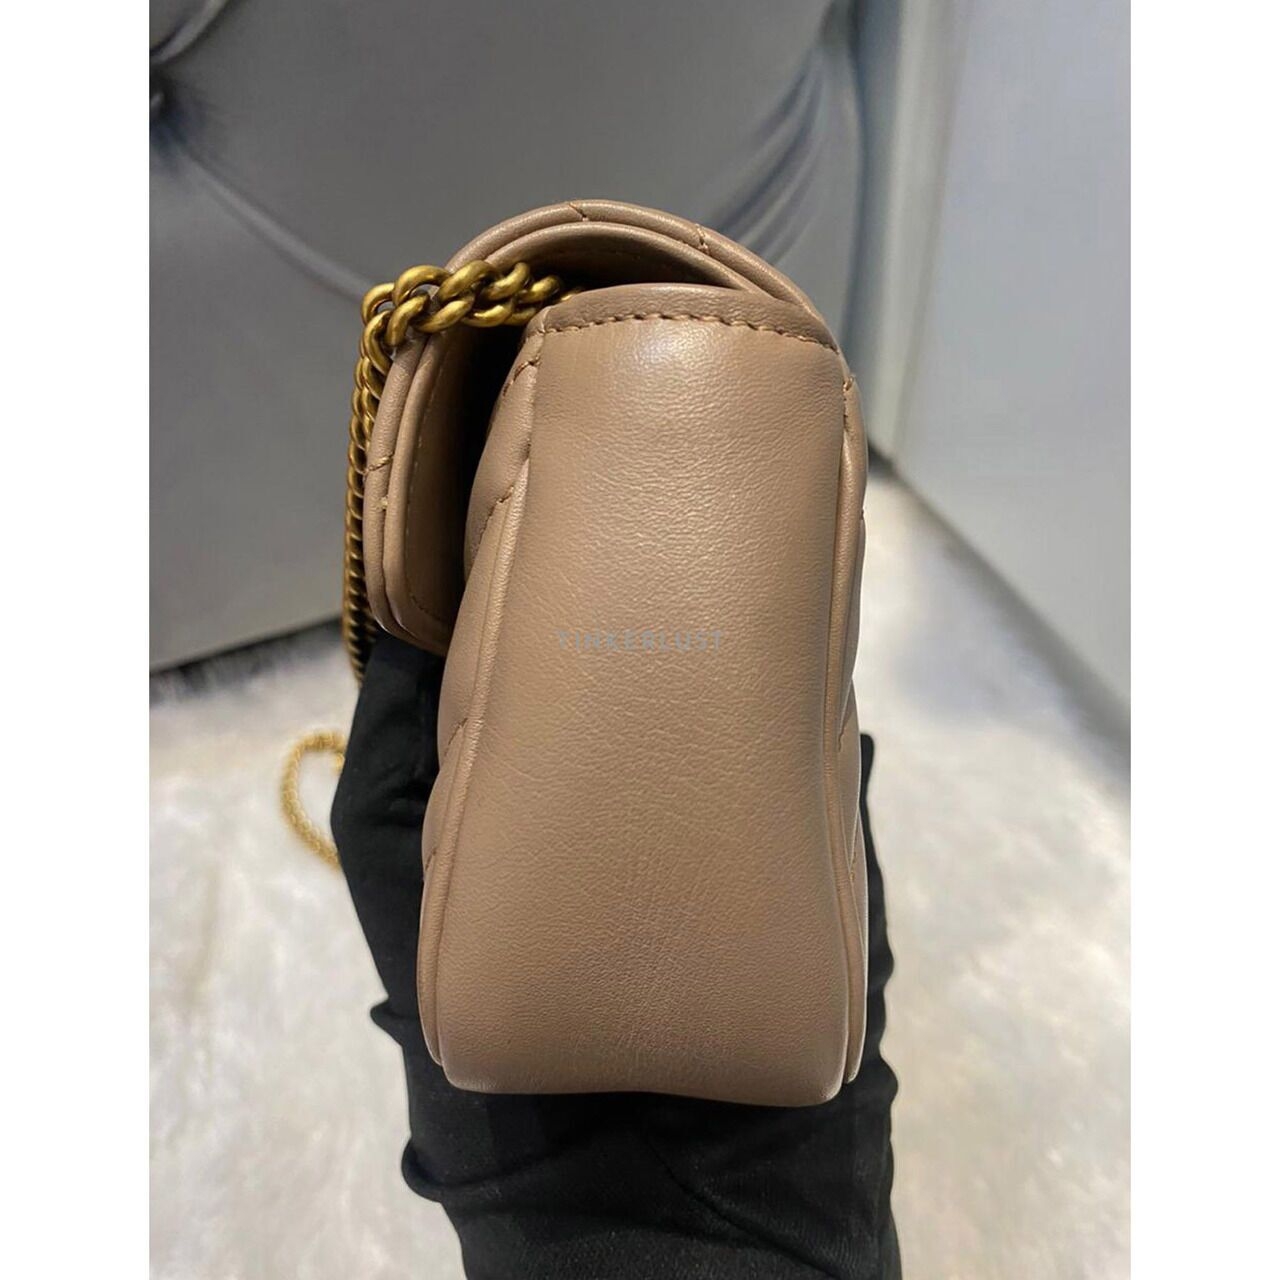 Gucci Marmont Super Mini Nude 2020 GHW Shoulder Bag